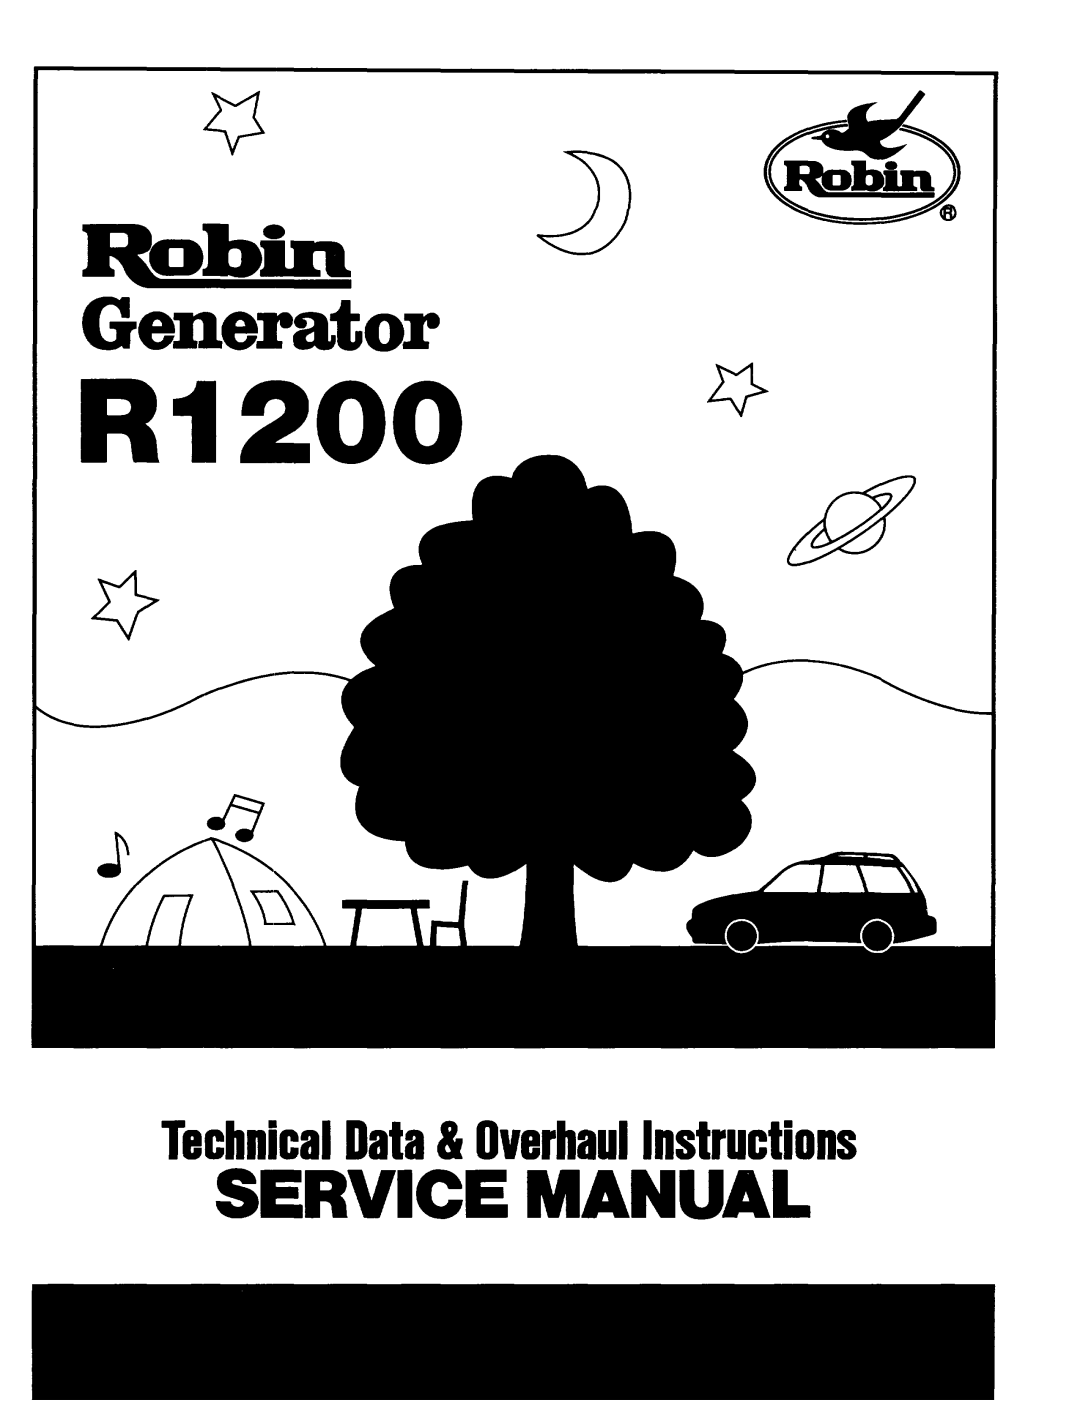 Subaru Robin Power Products R1200 manual 